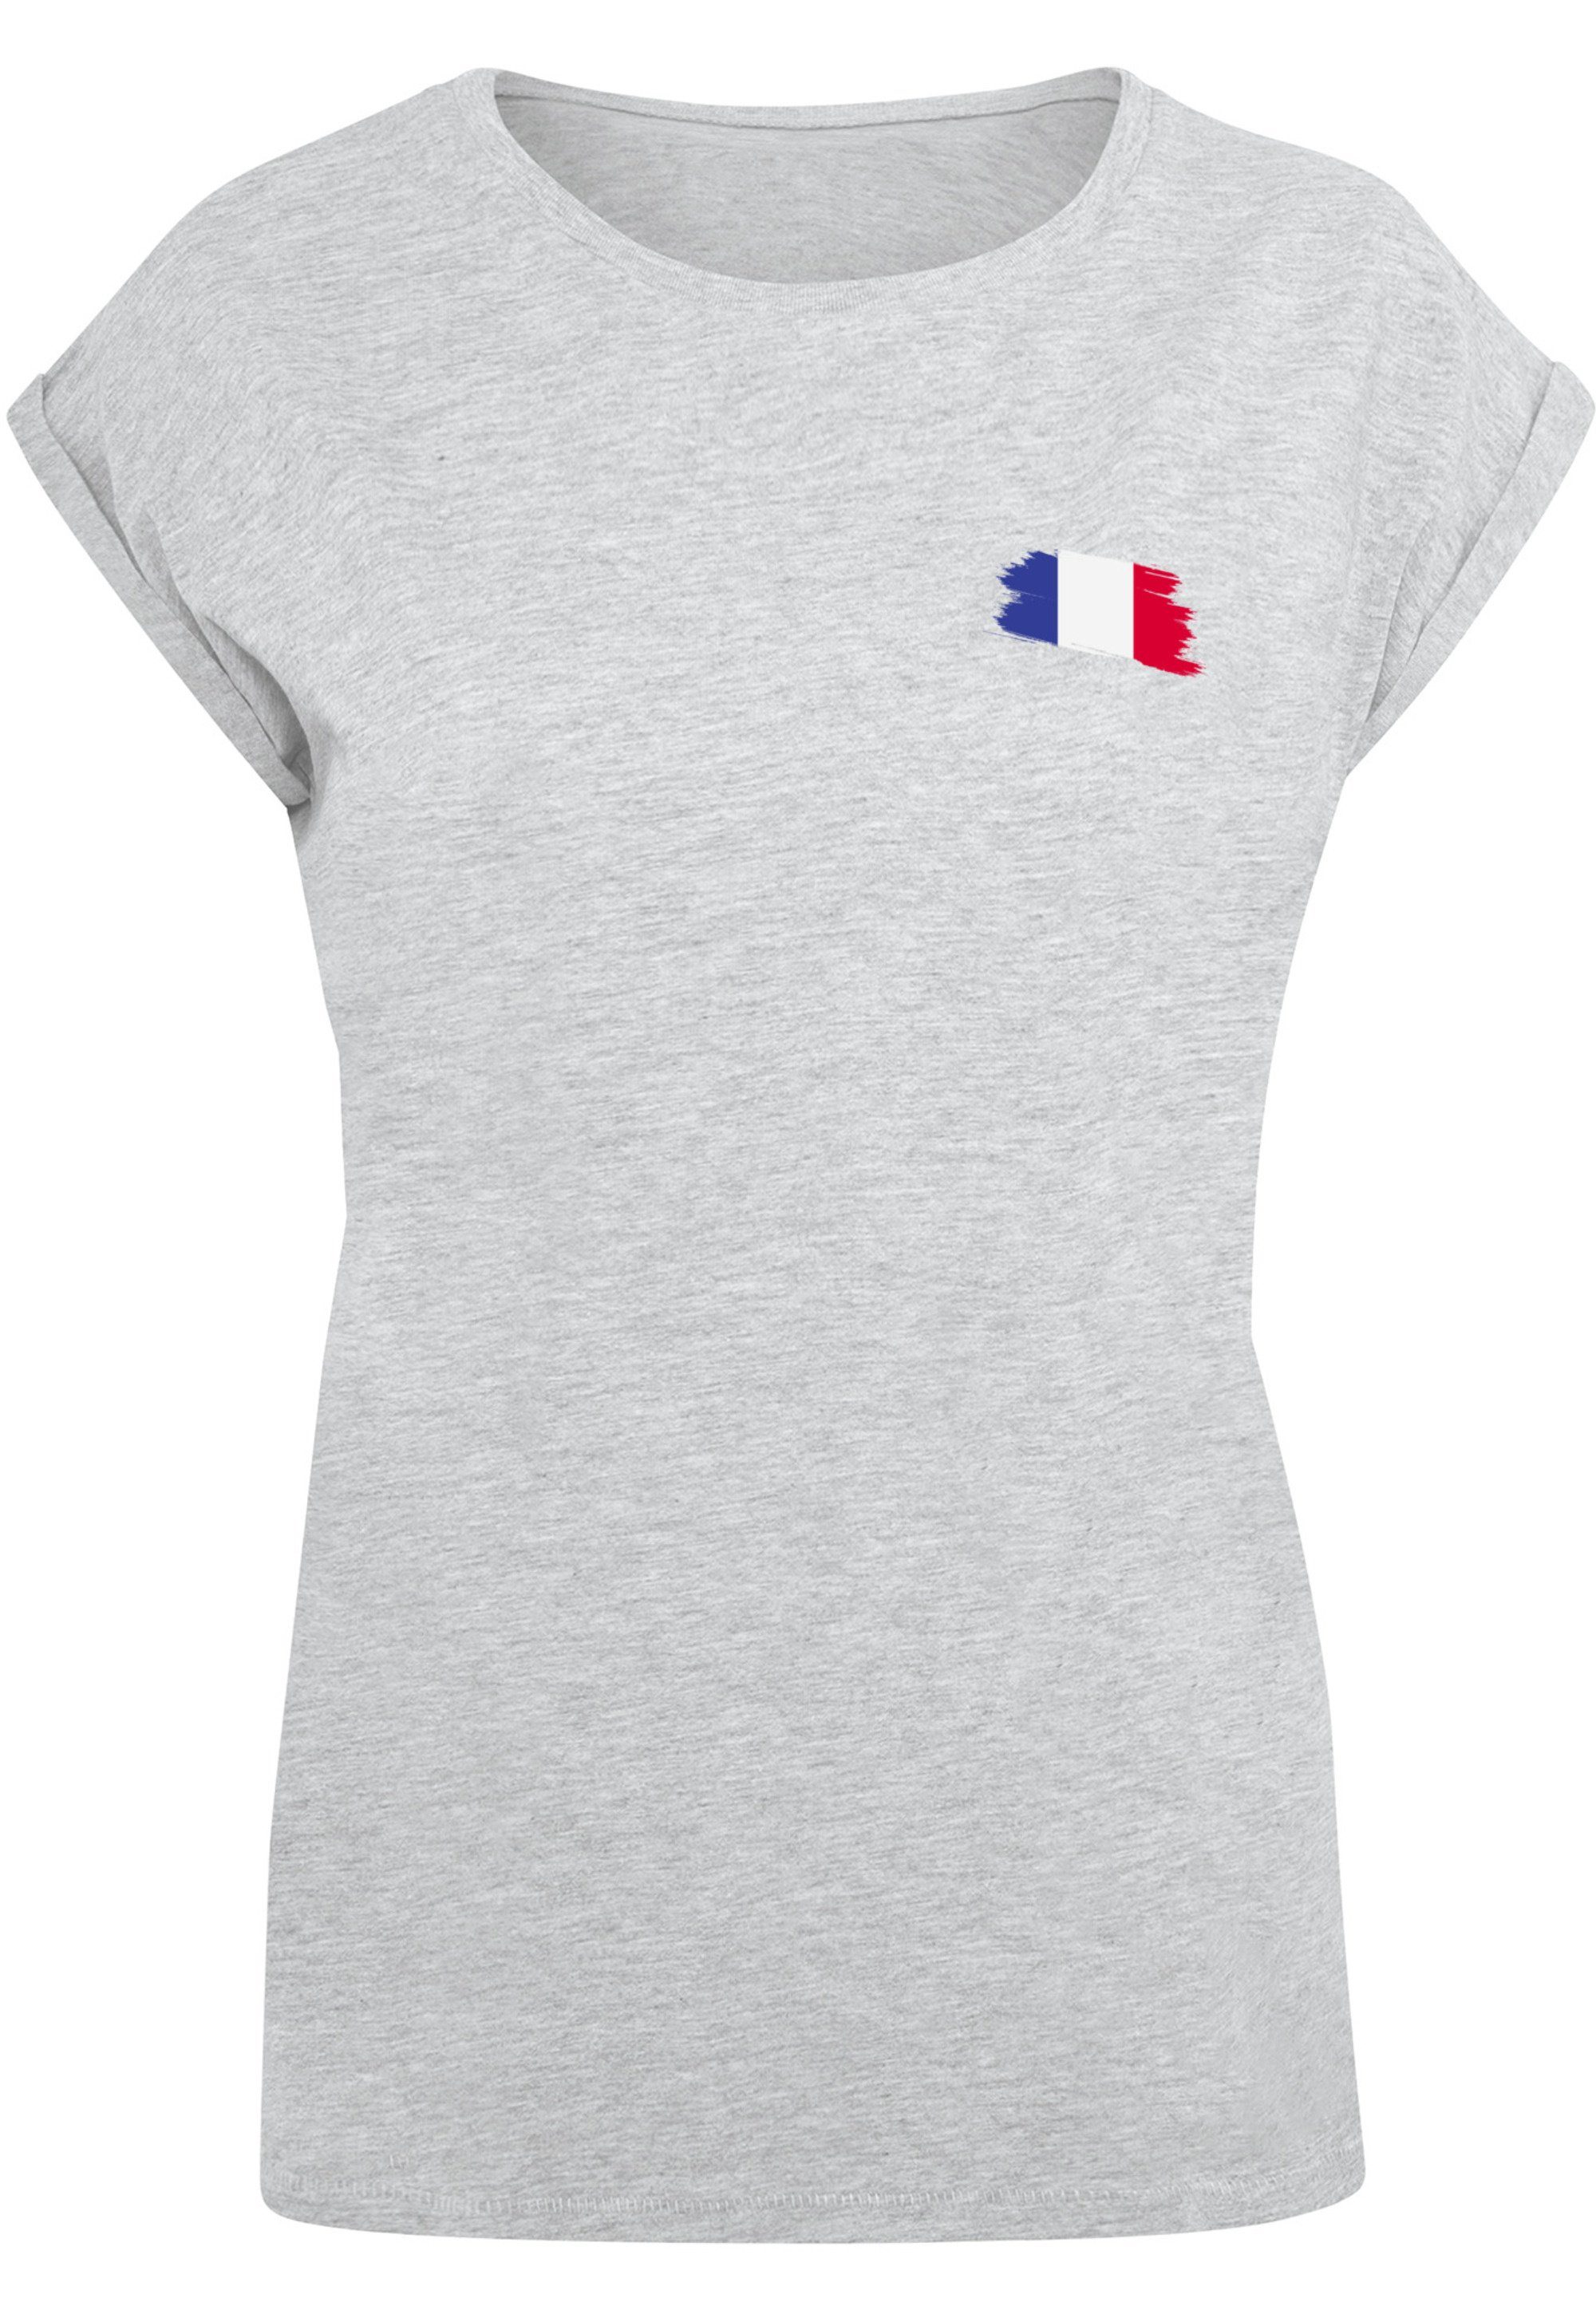 Flagge ist France Frankreich trägt F4NT4STIC T-Shirt und Größe Das 170 cm Fahne Model M Print, groß